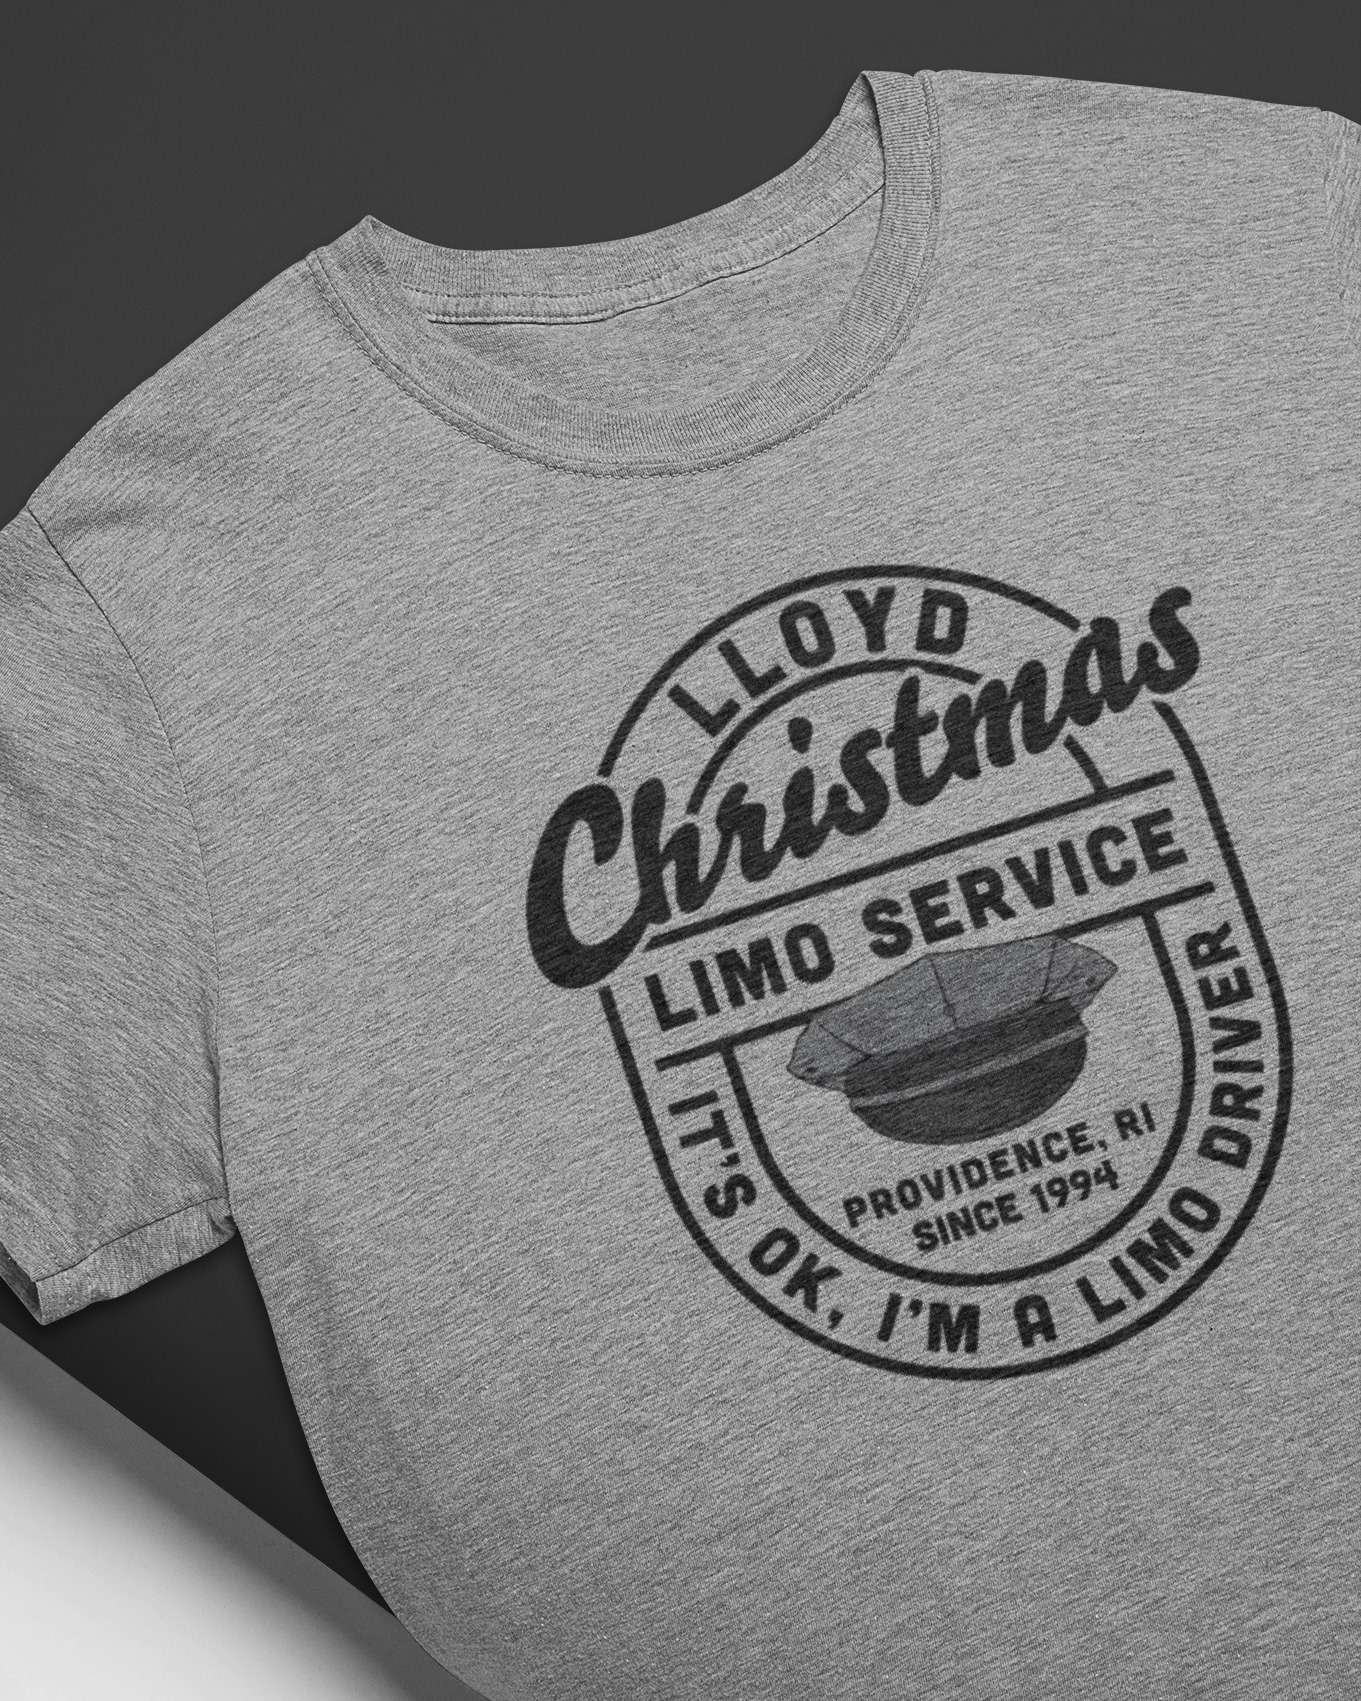 Lloyd Christmas limo service - It's ok, I'm a limo driver